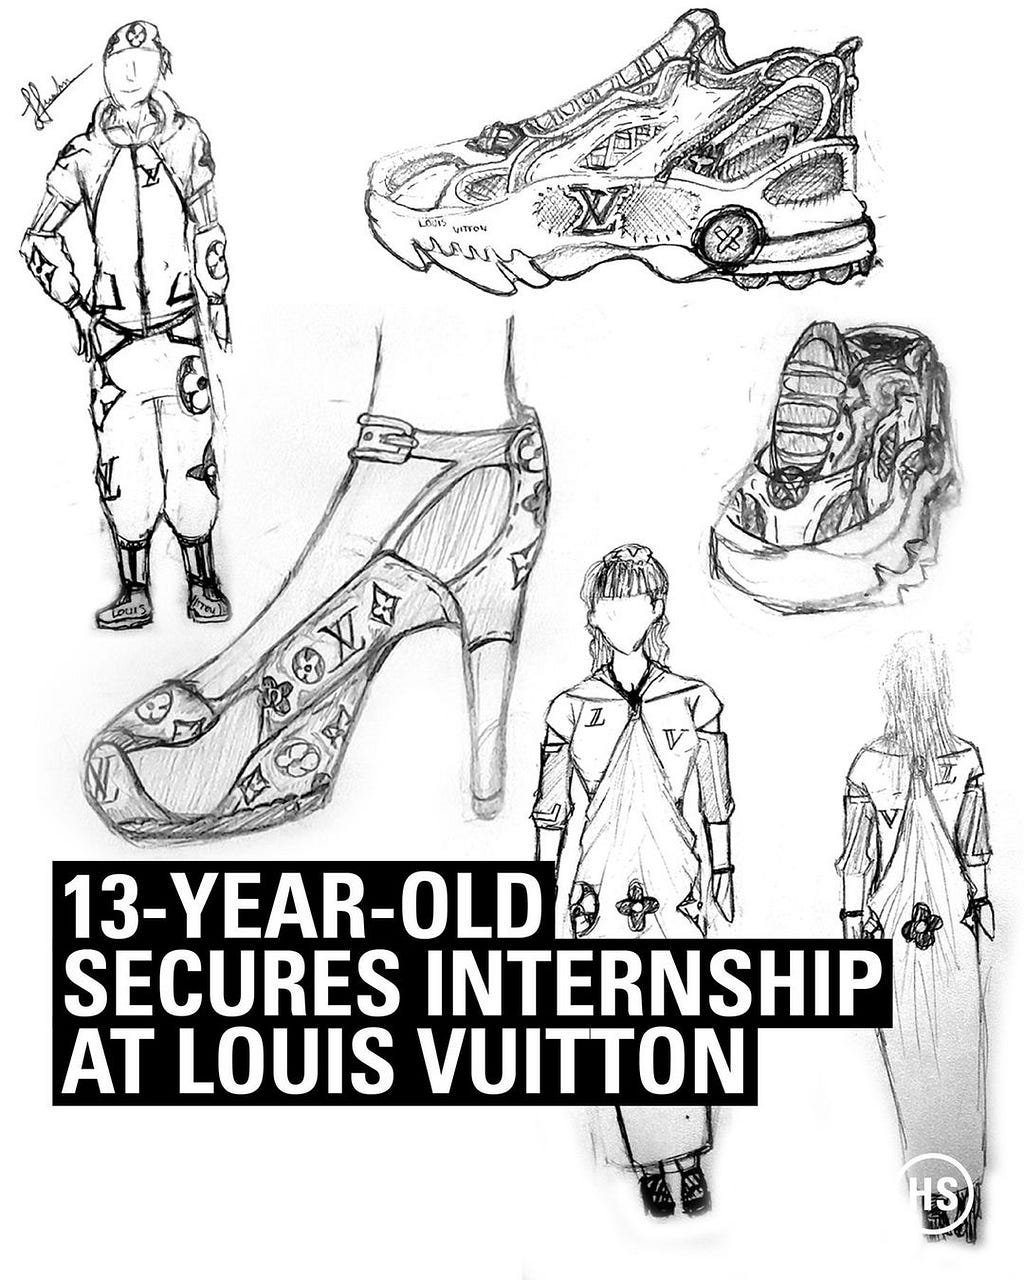 Louis Vuitton internship